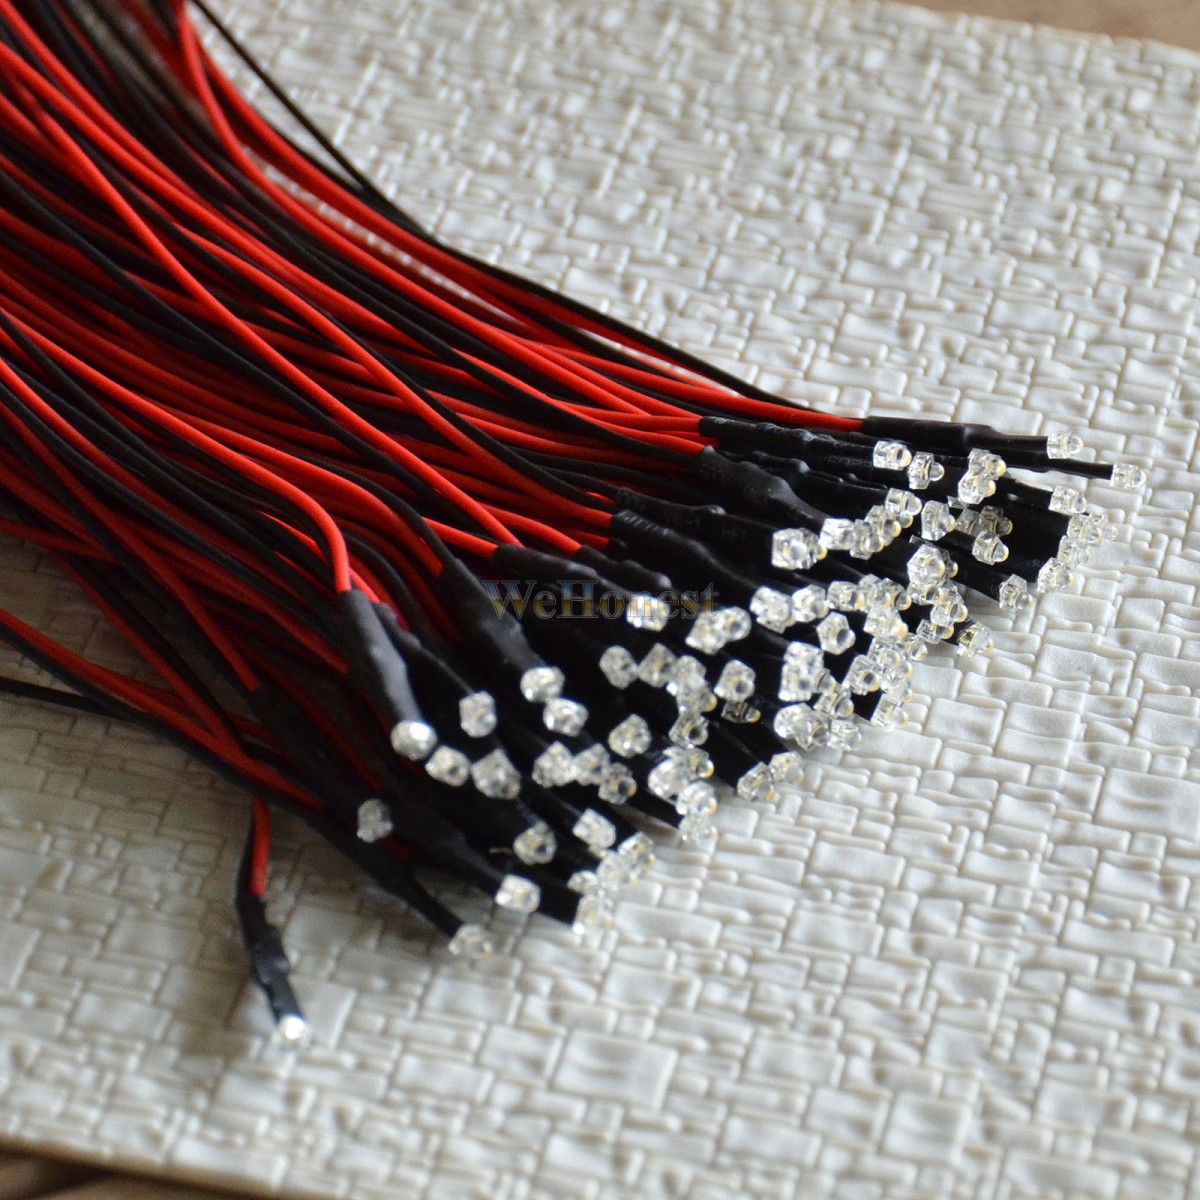 10 x Pre-Wired 1.8mm bright white LEDs prewired resistor for 12V - 16V use